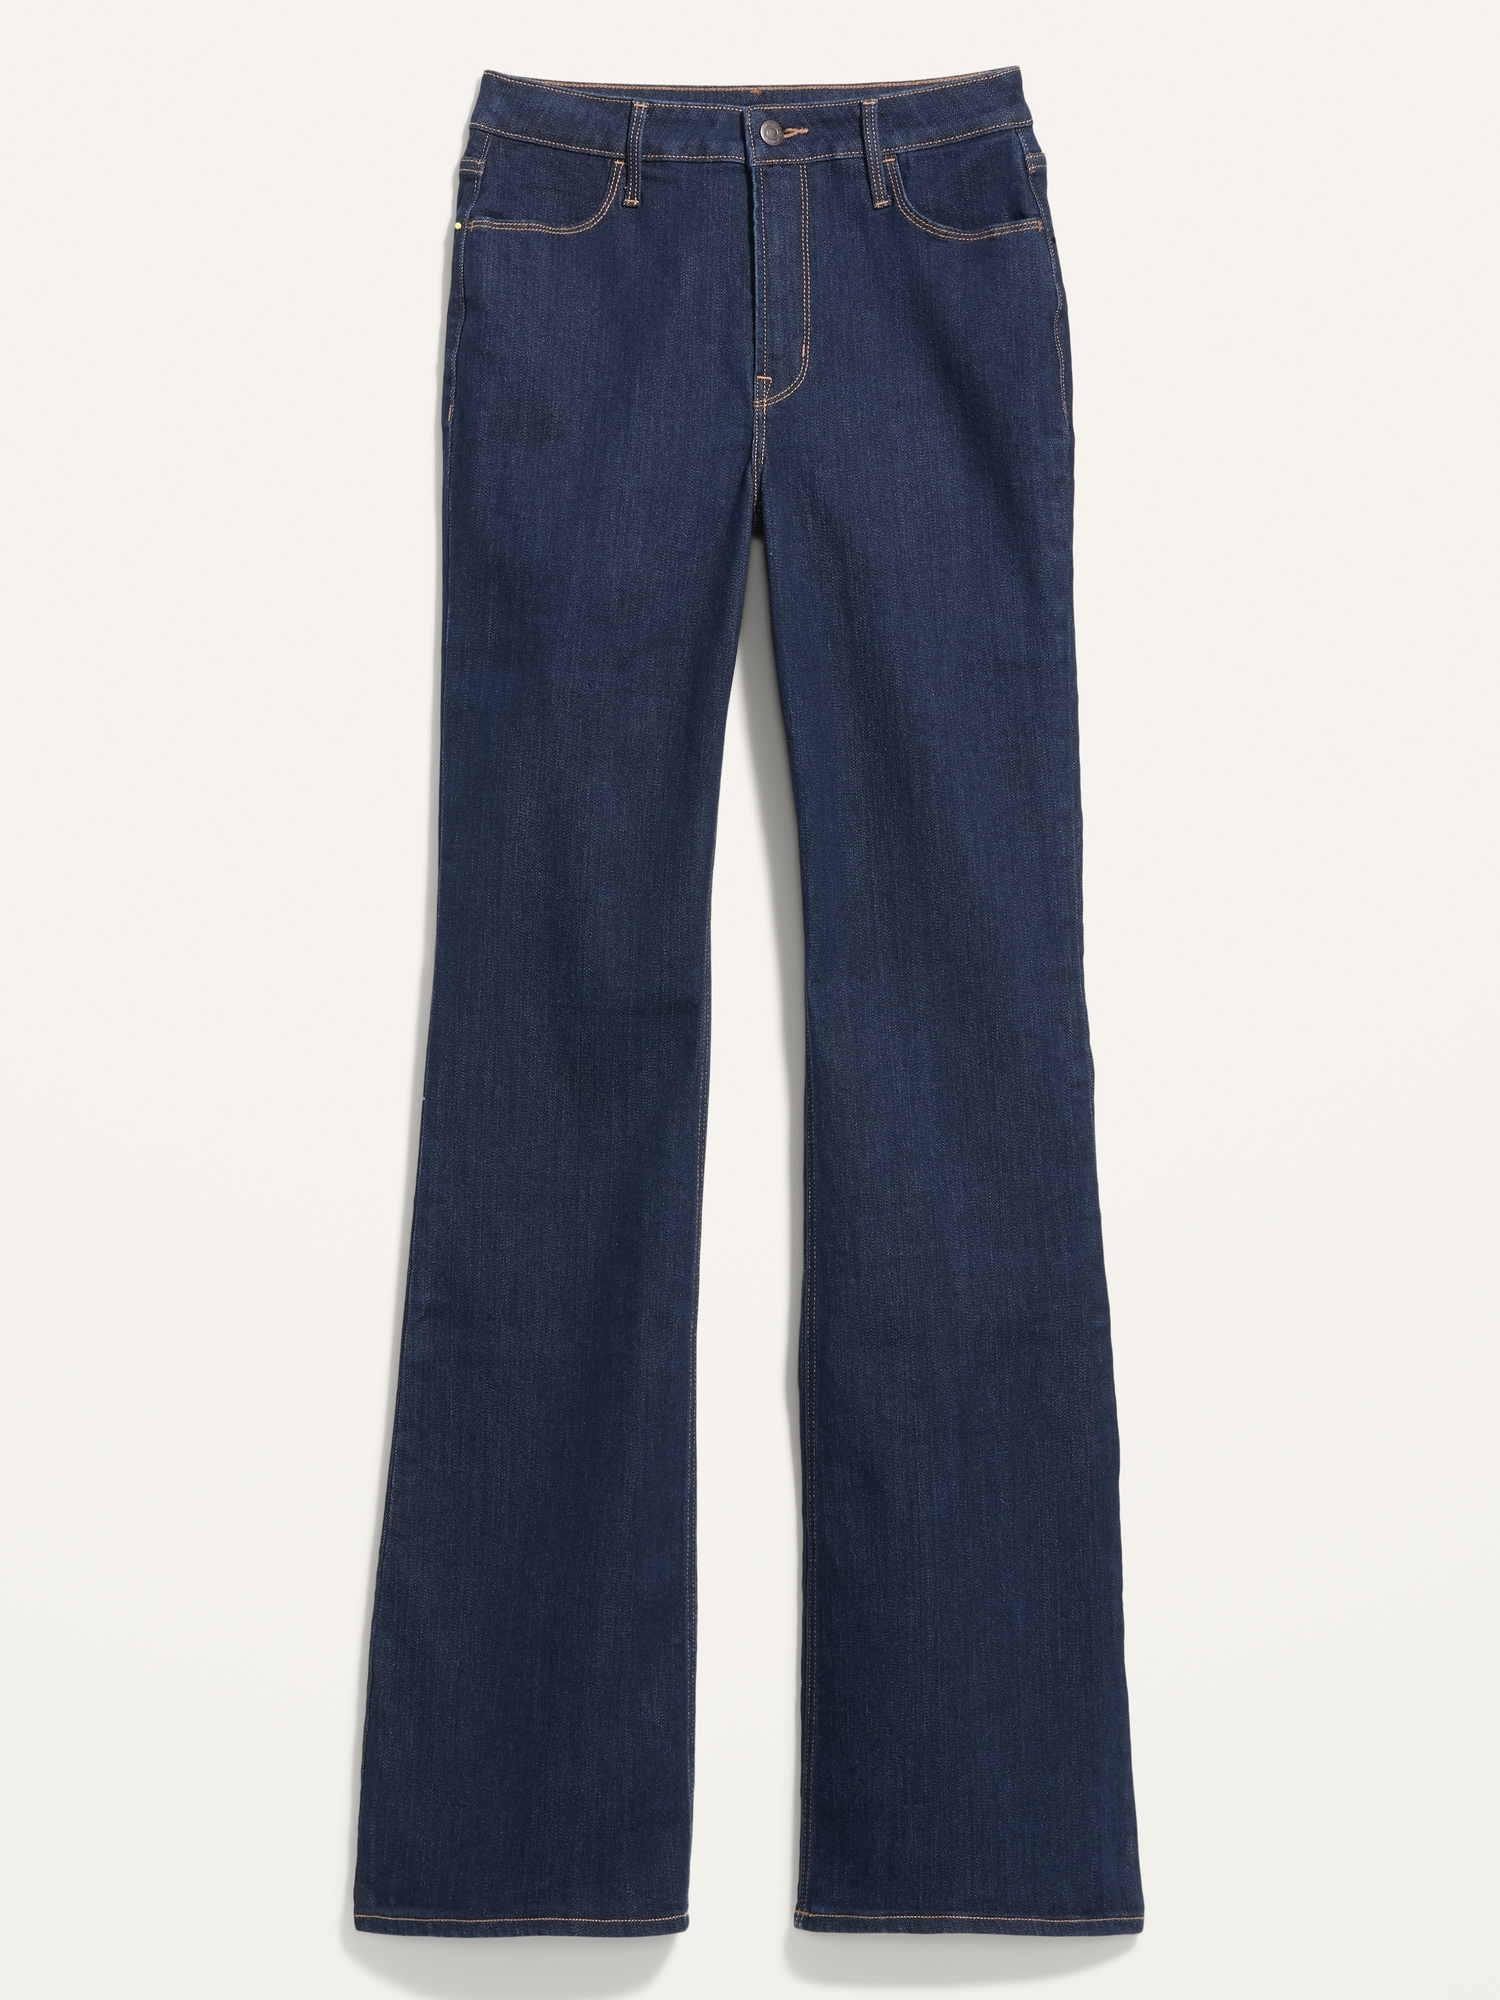 Old Navy Campeche Blue Stretch Denim High Rise Flare Jeans 14